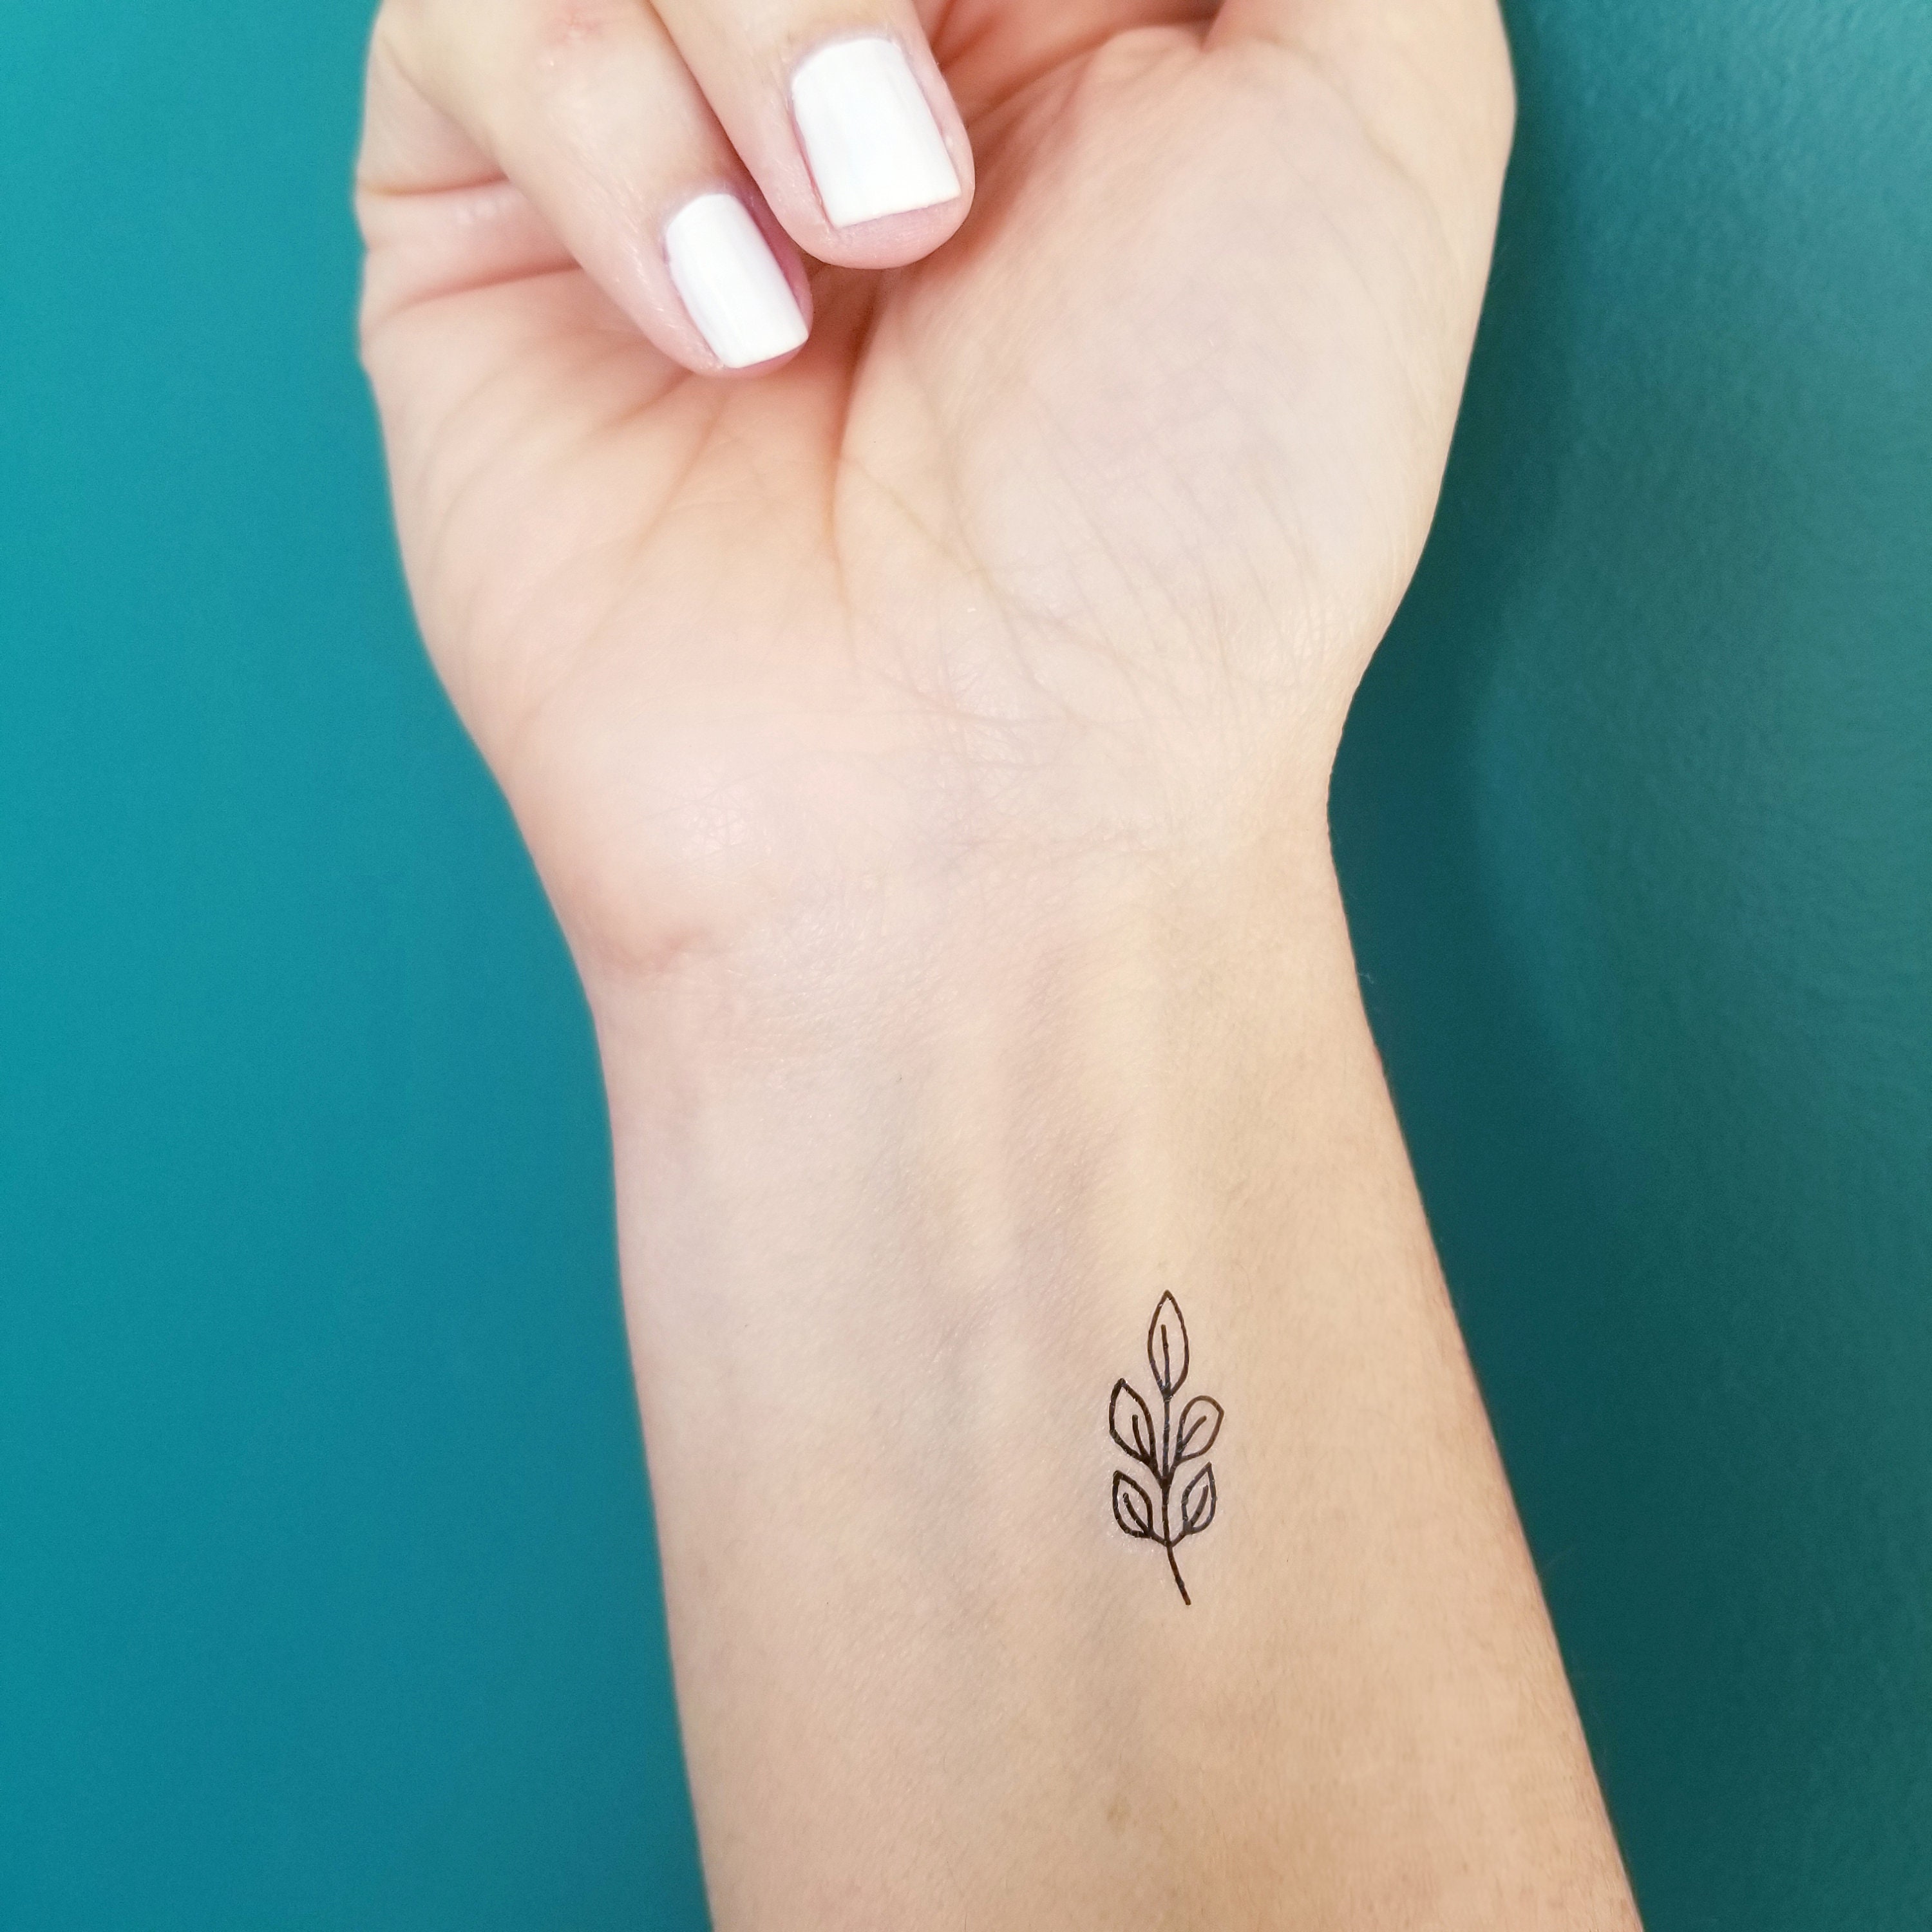 22 Leaf Tattoos That Will Make Fall a Permanent Season . . . on Your Body!  | Tattoo designs, Leaf tattoos, Simple tattoos